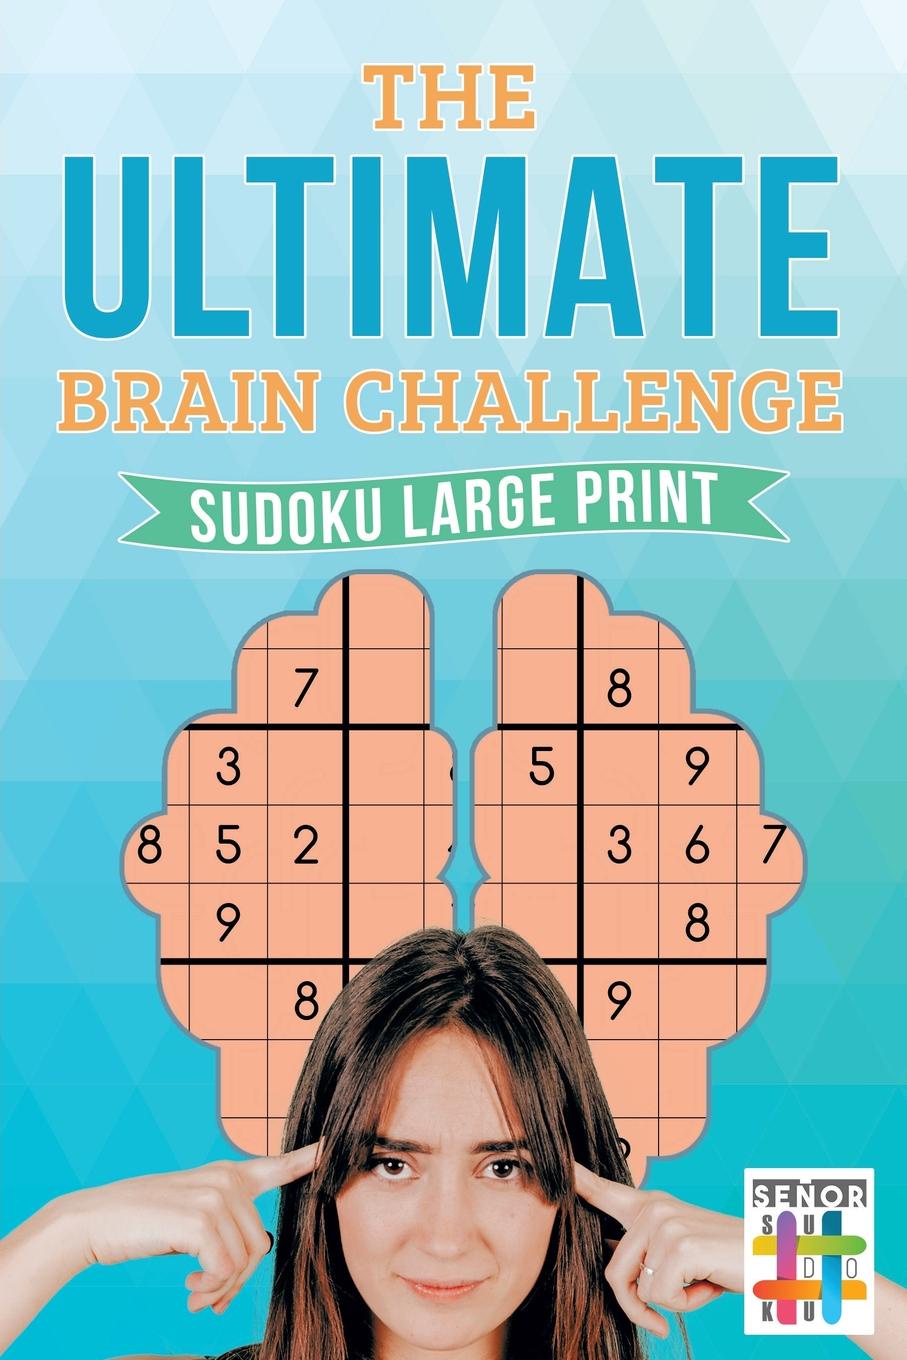 Brain challenge. The Ultimate Brain.